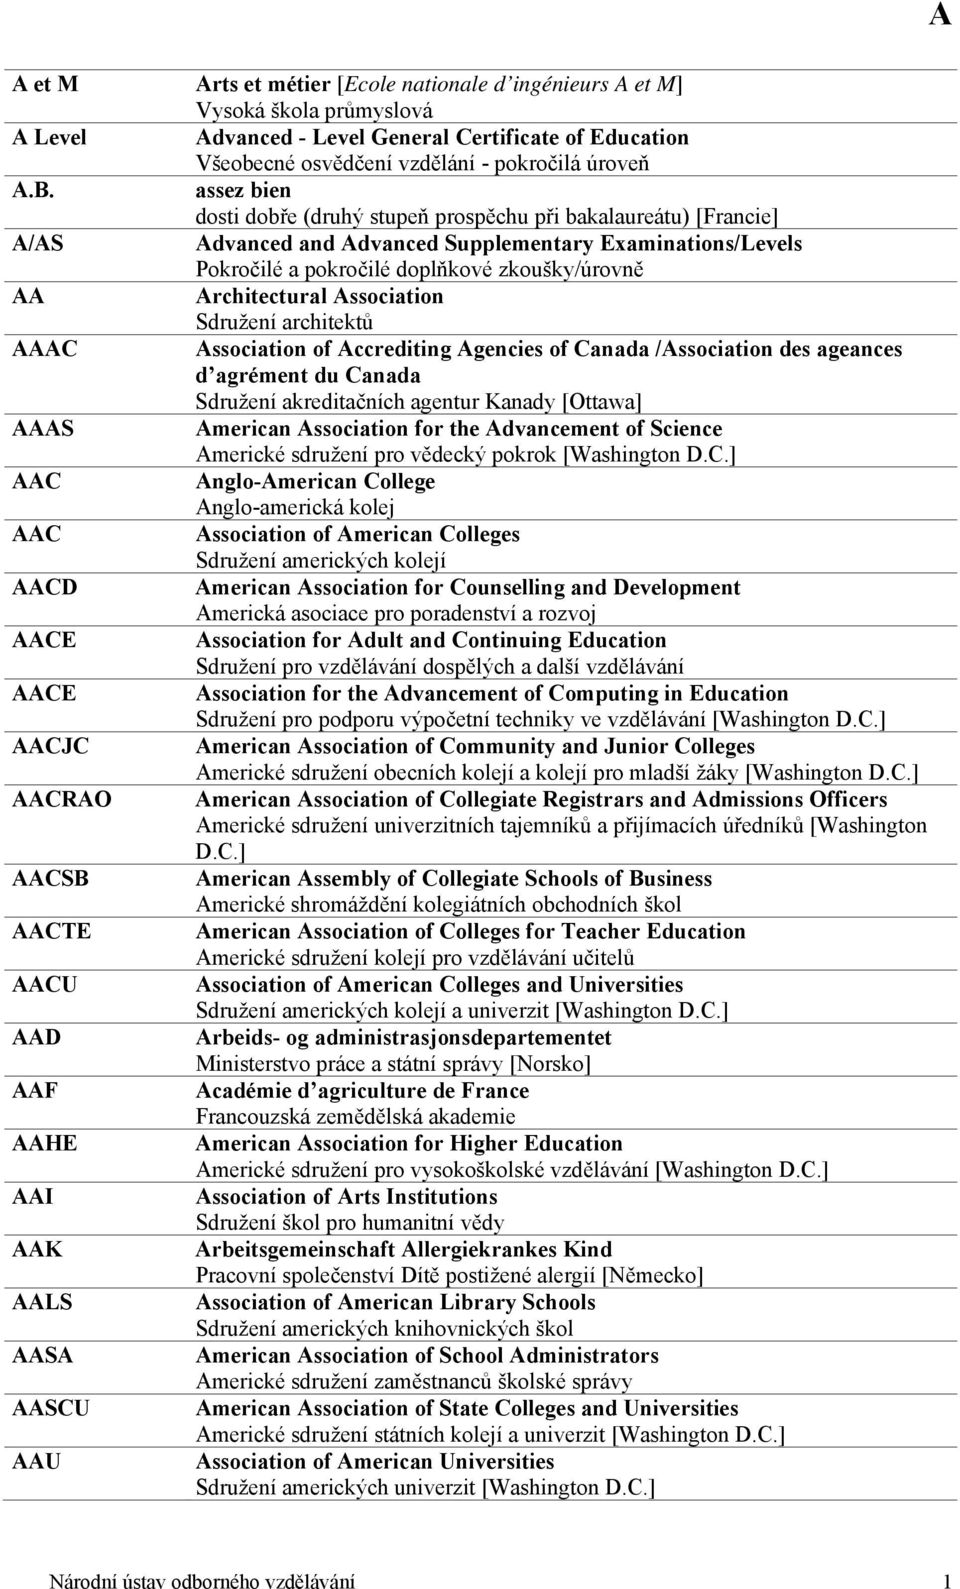 Association Sdružení architektů AAAC Association of Accrediting Agencies of Canada /Association des ageances d agrément du Canada Sdružení akreditačních agentur Kanady [Ottawa] AAAS American